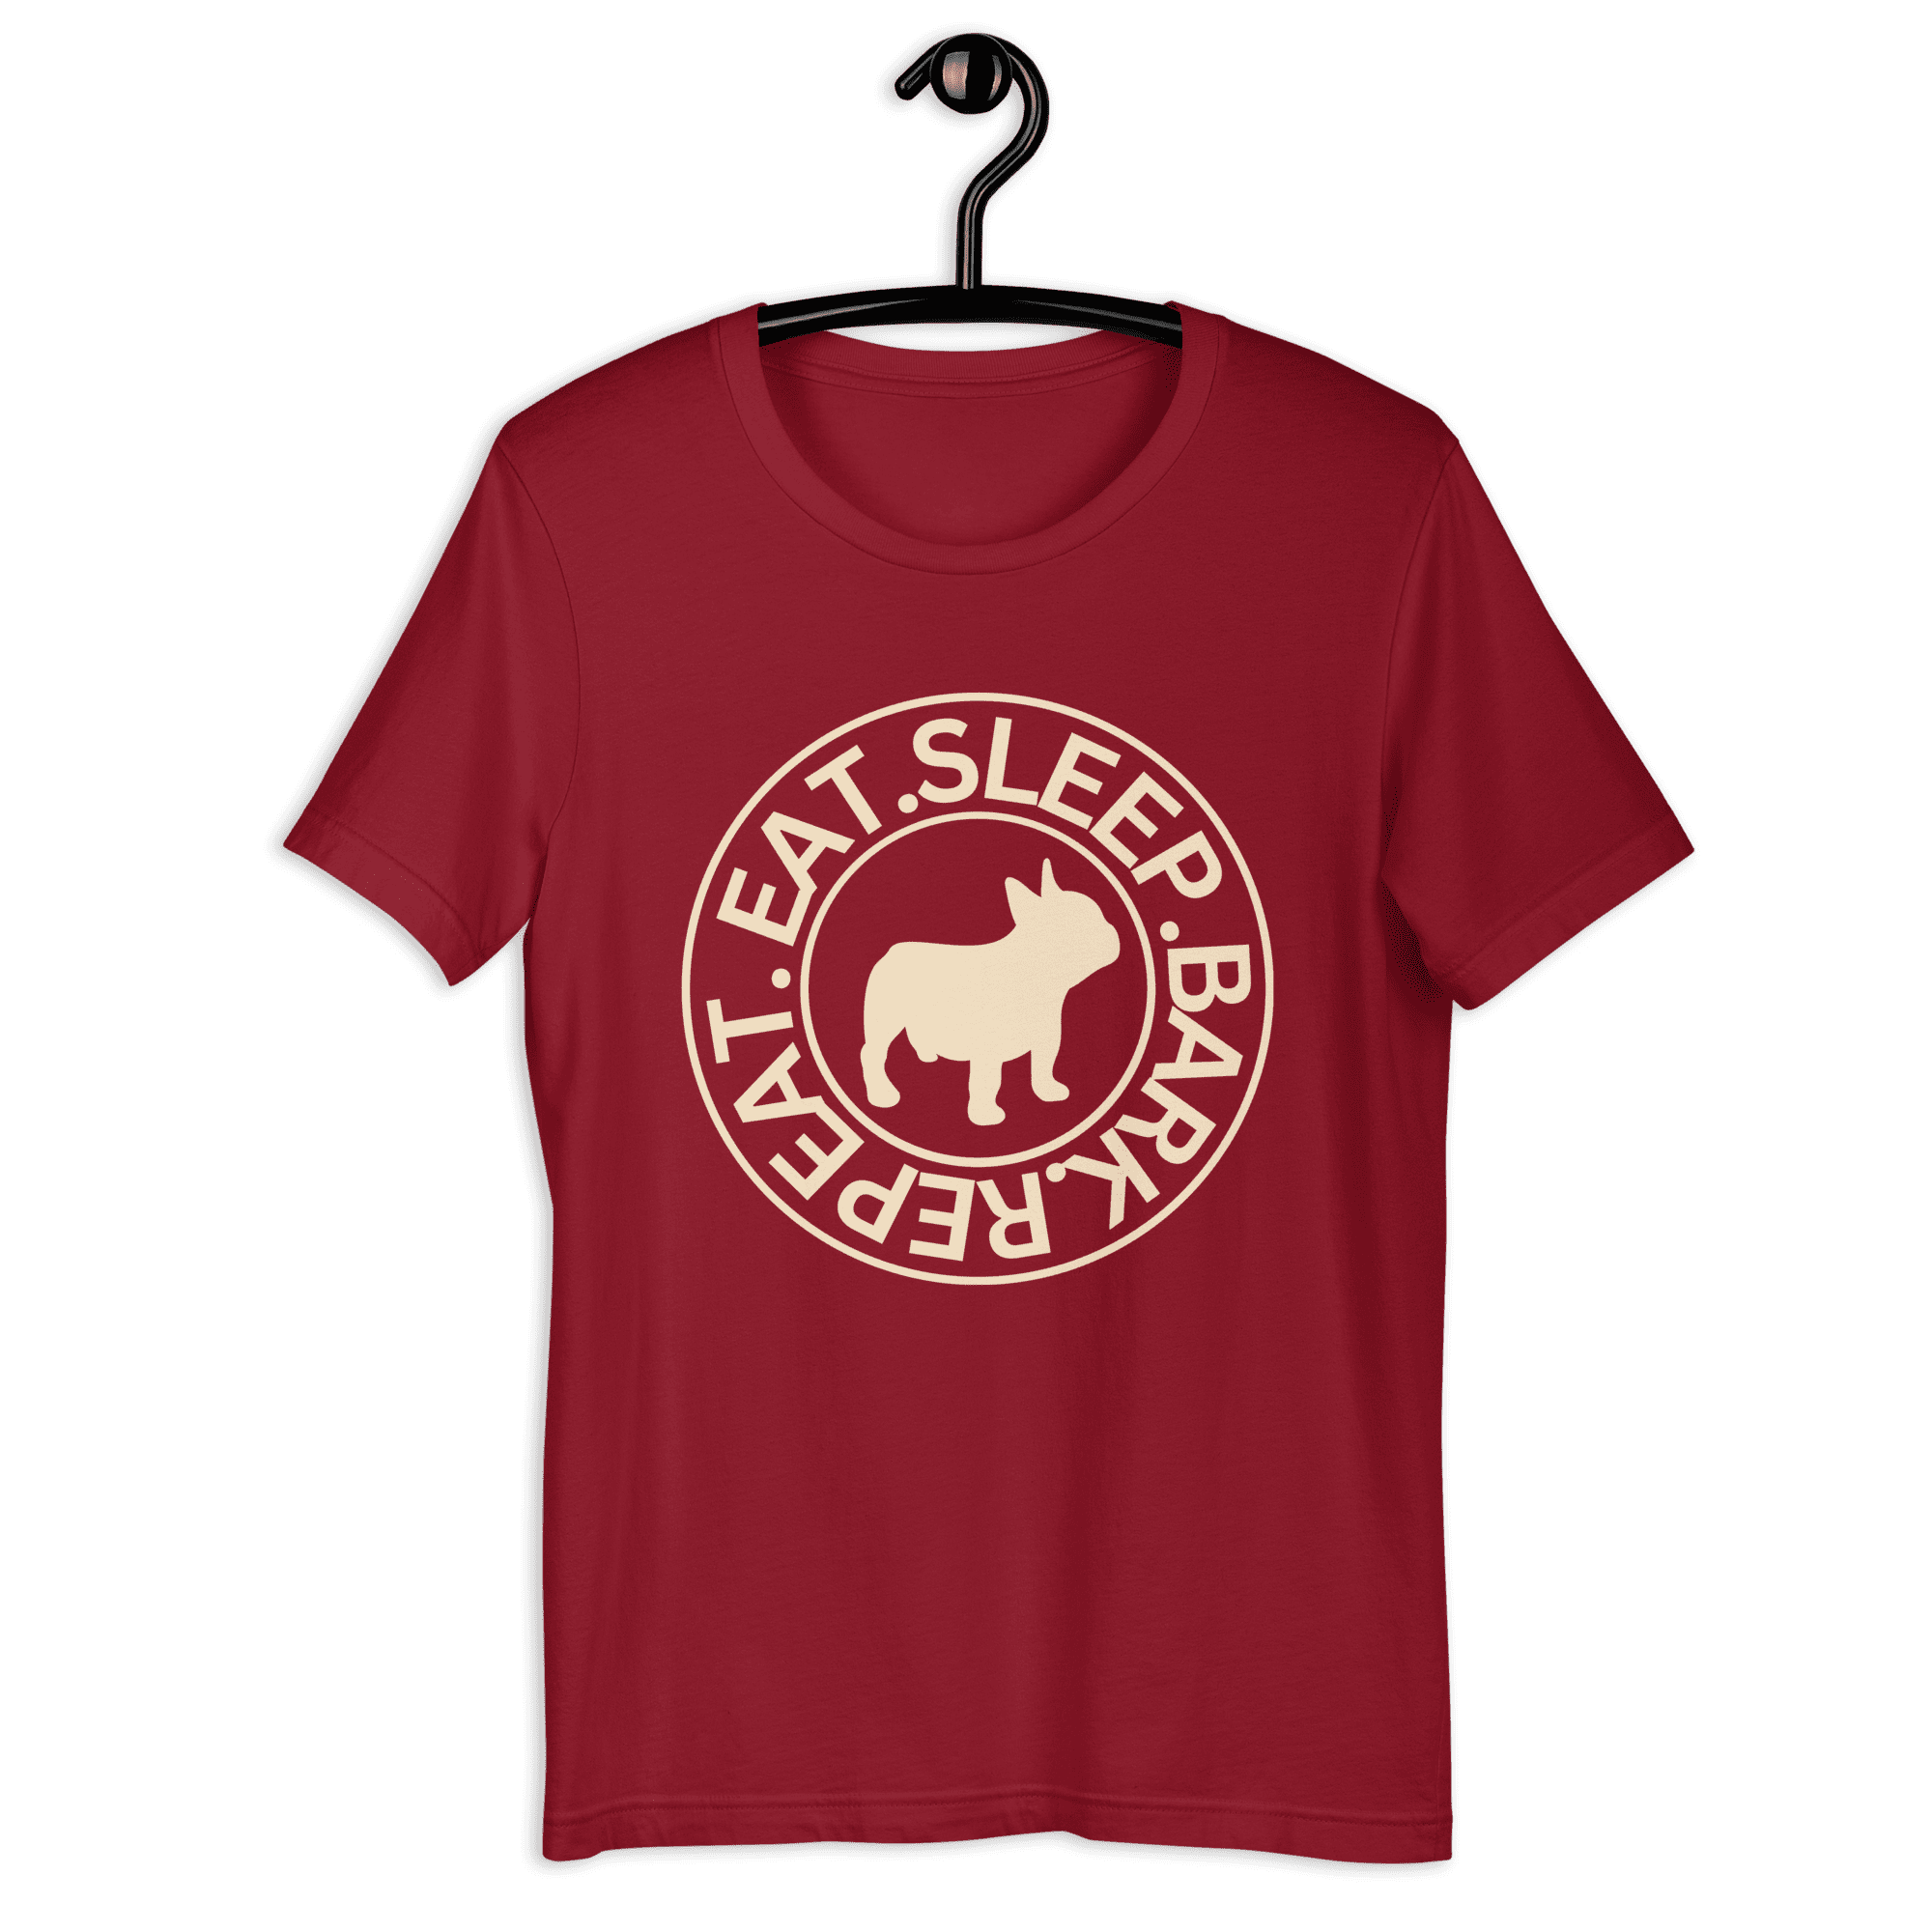 The "Eat Sleep Bark Repeat" French Bulldog Unisex T-Shirt. Red